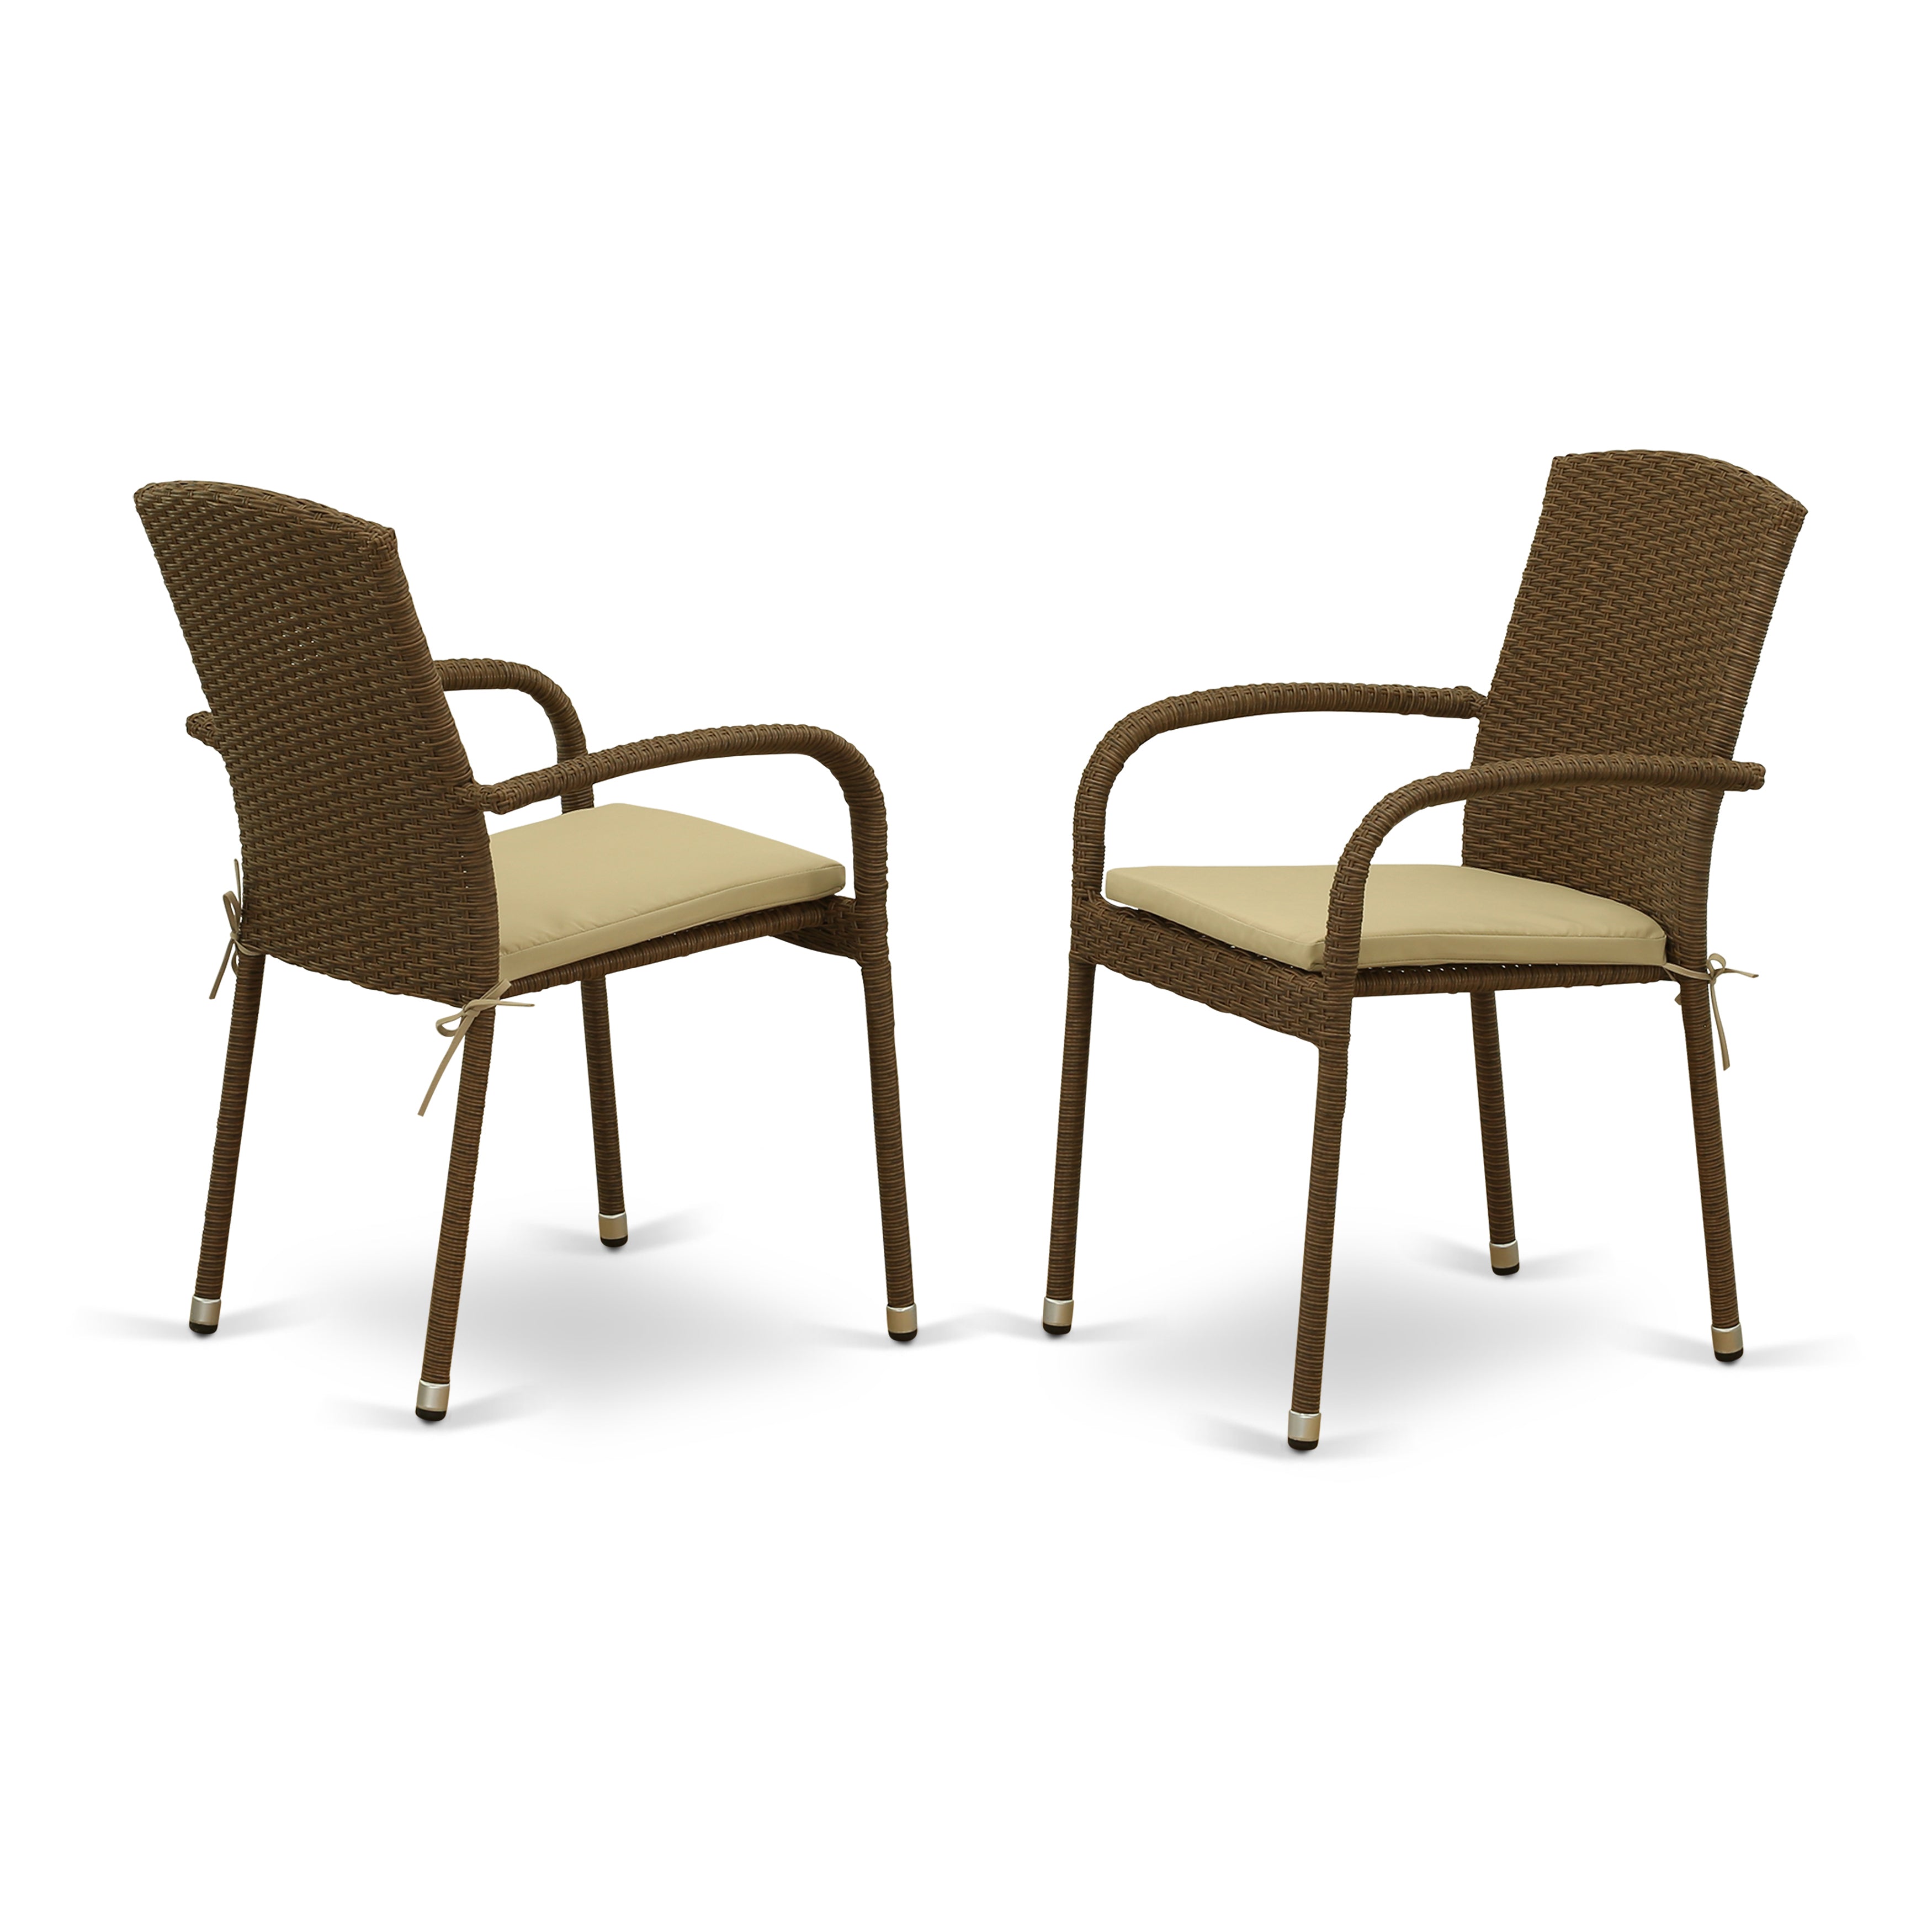 Jubi Metal & Wicker Patio Dining Chairs in Brown (Set of 2)